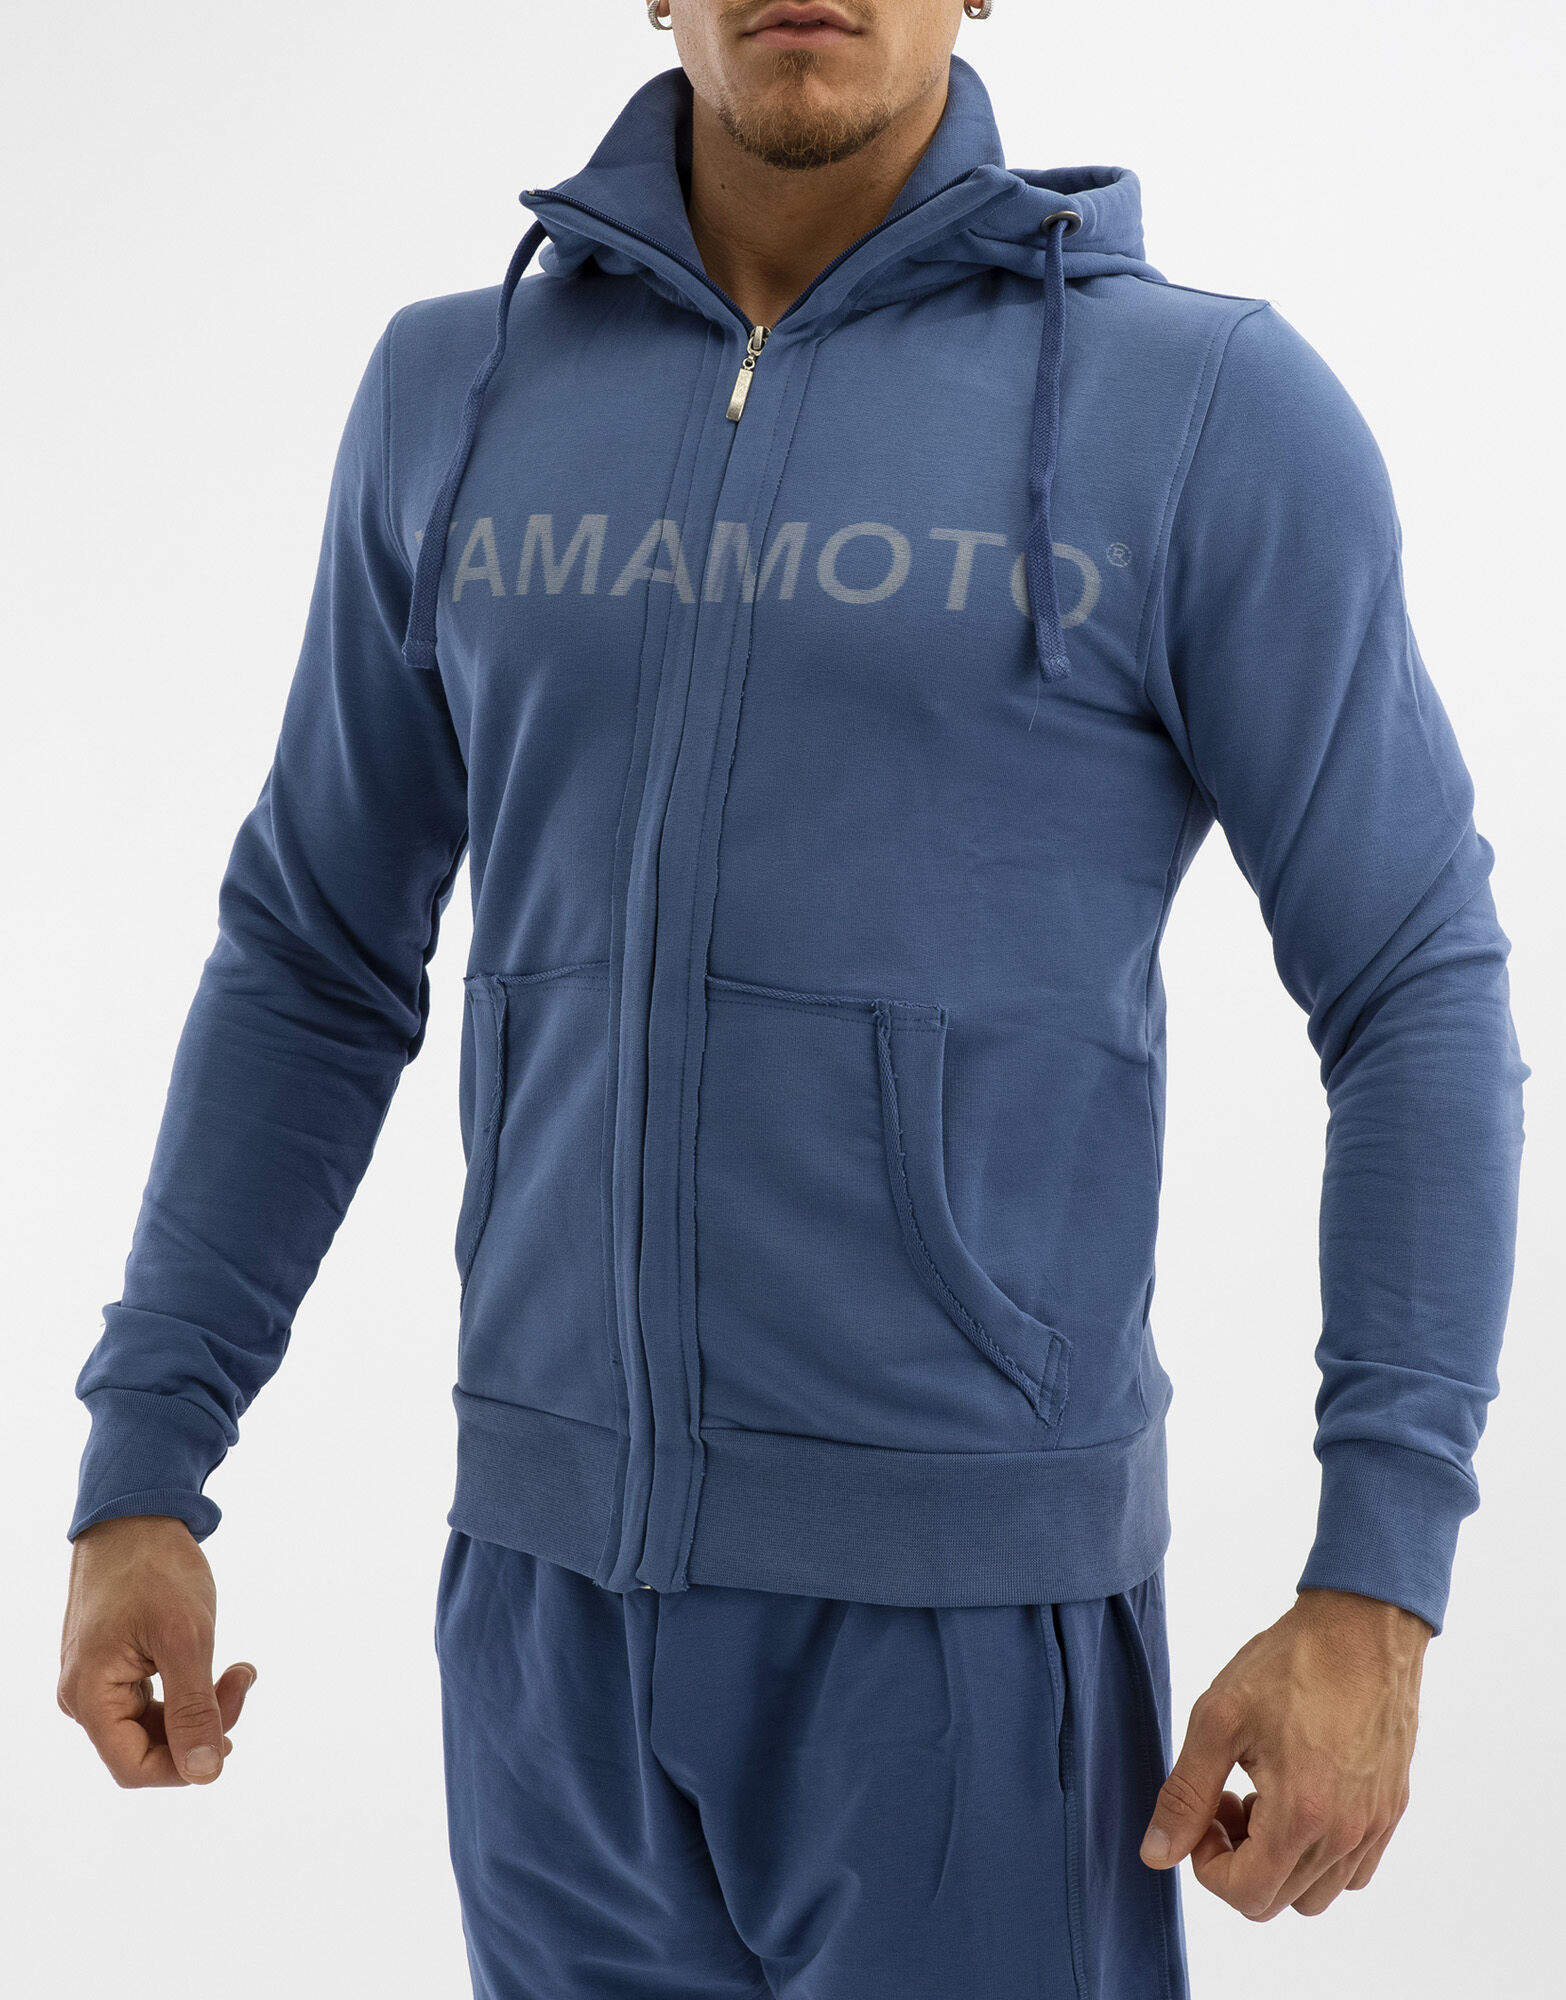 YAMAMOTO OUTFIT Sweatshirt Zip Colore: Navy M